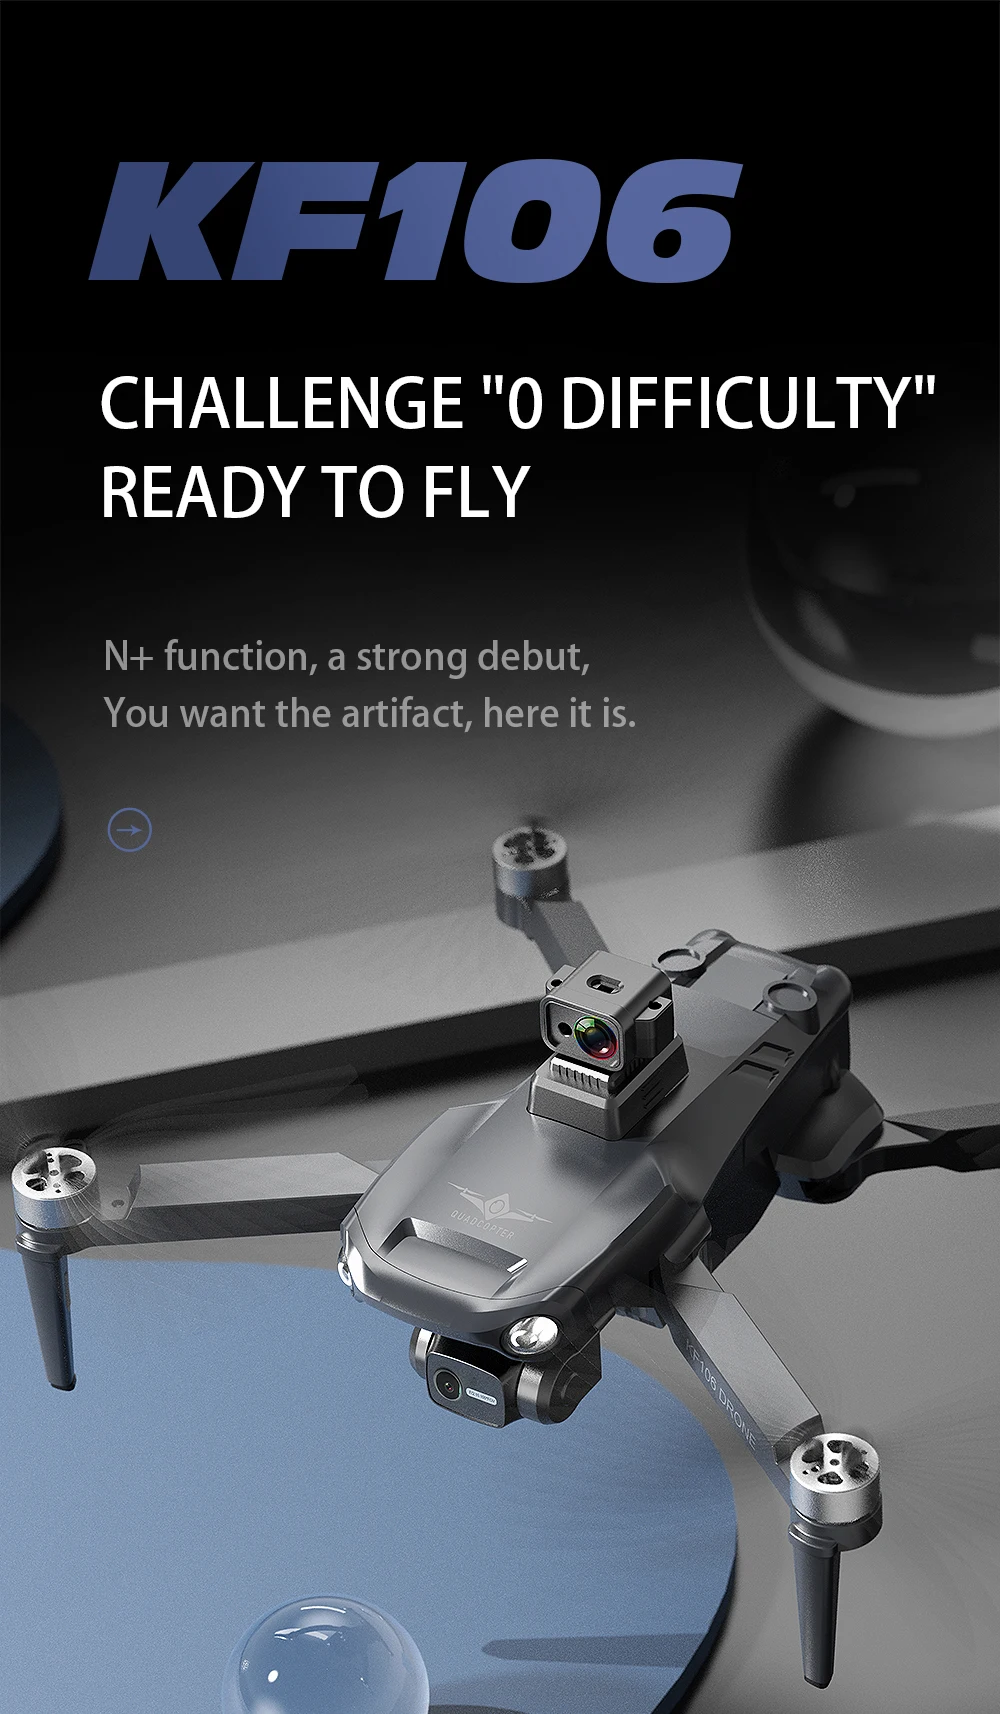 KFPLAN KF106 Drone, KF1O6 CHALLENGE "0 DIFFICULTY" REA